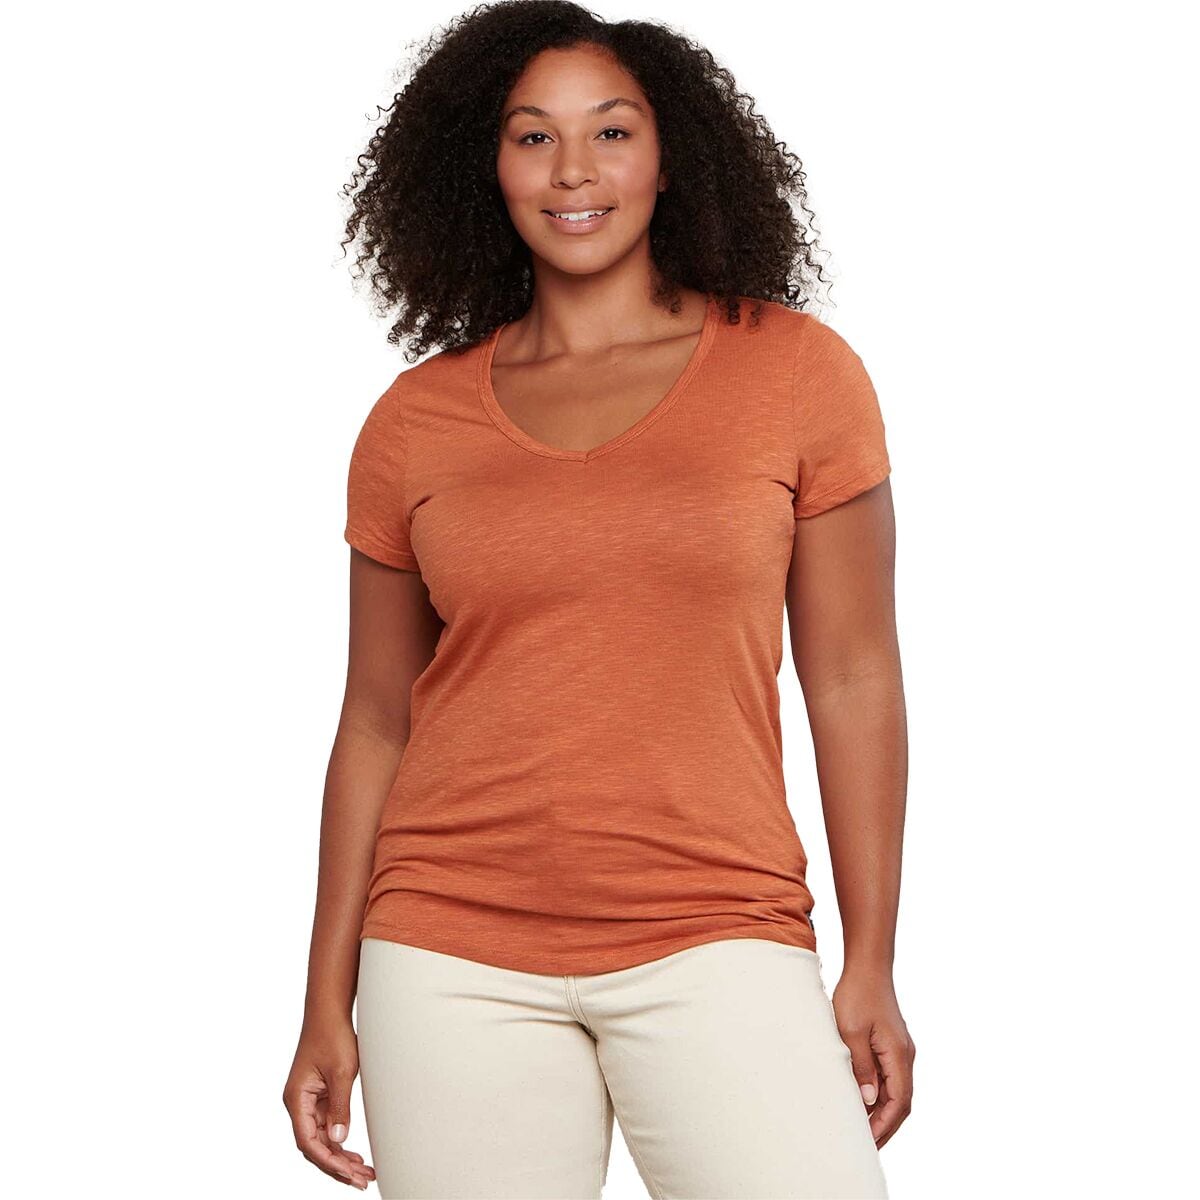 Marley II Short-Sleeve T-Shirt - Women